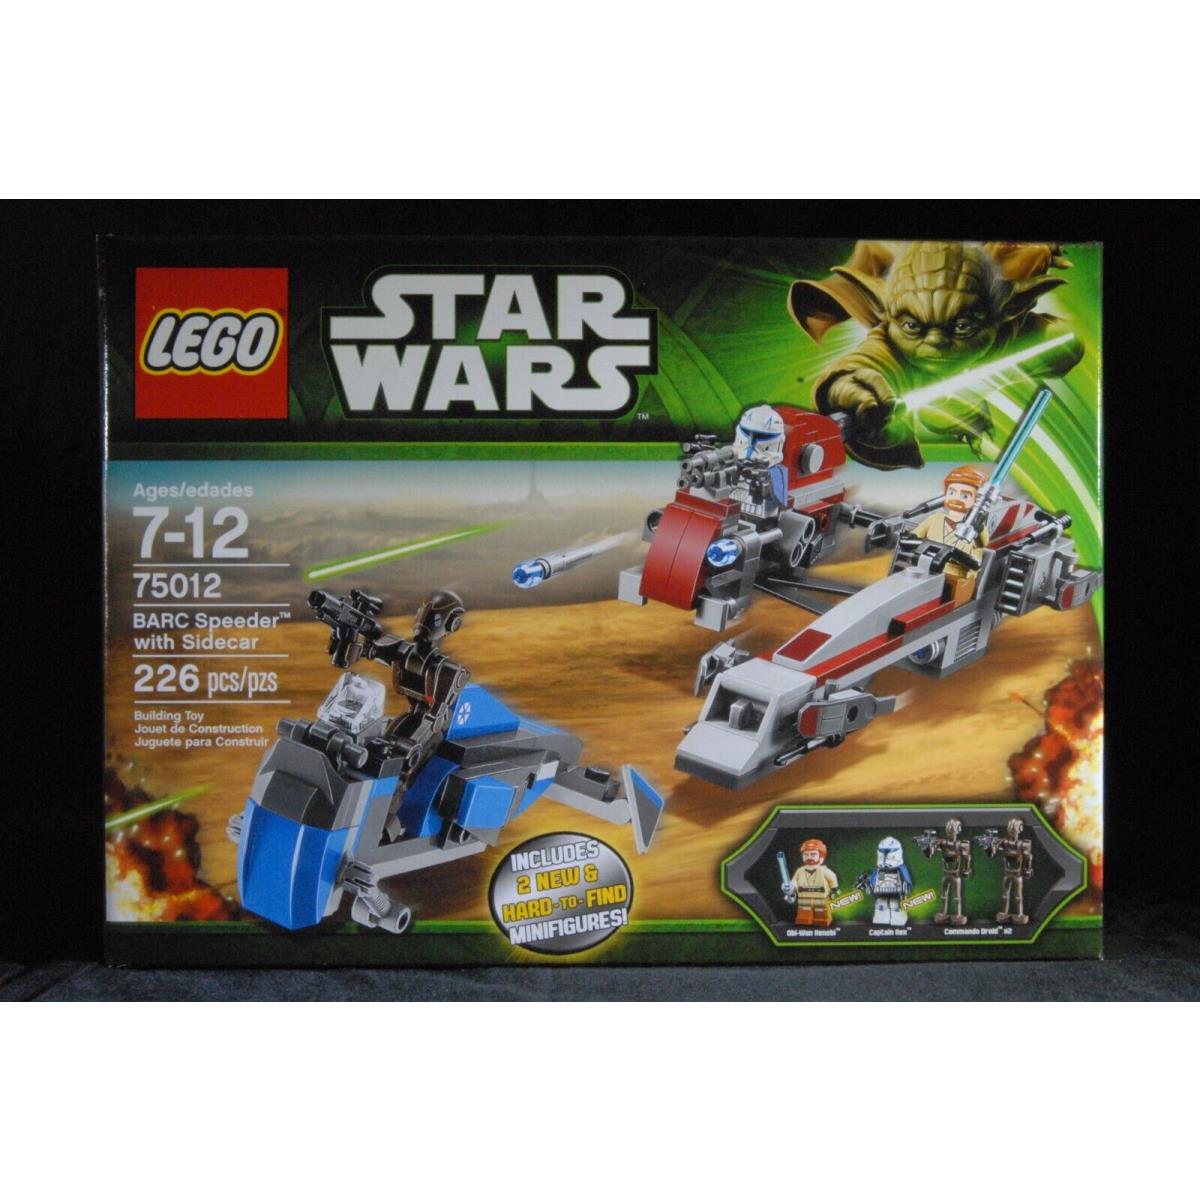 Lego Star Wars Barc Speeder with Sidecar 75012 Retired